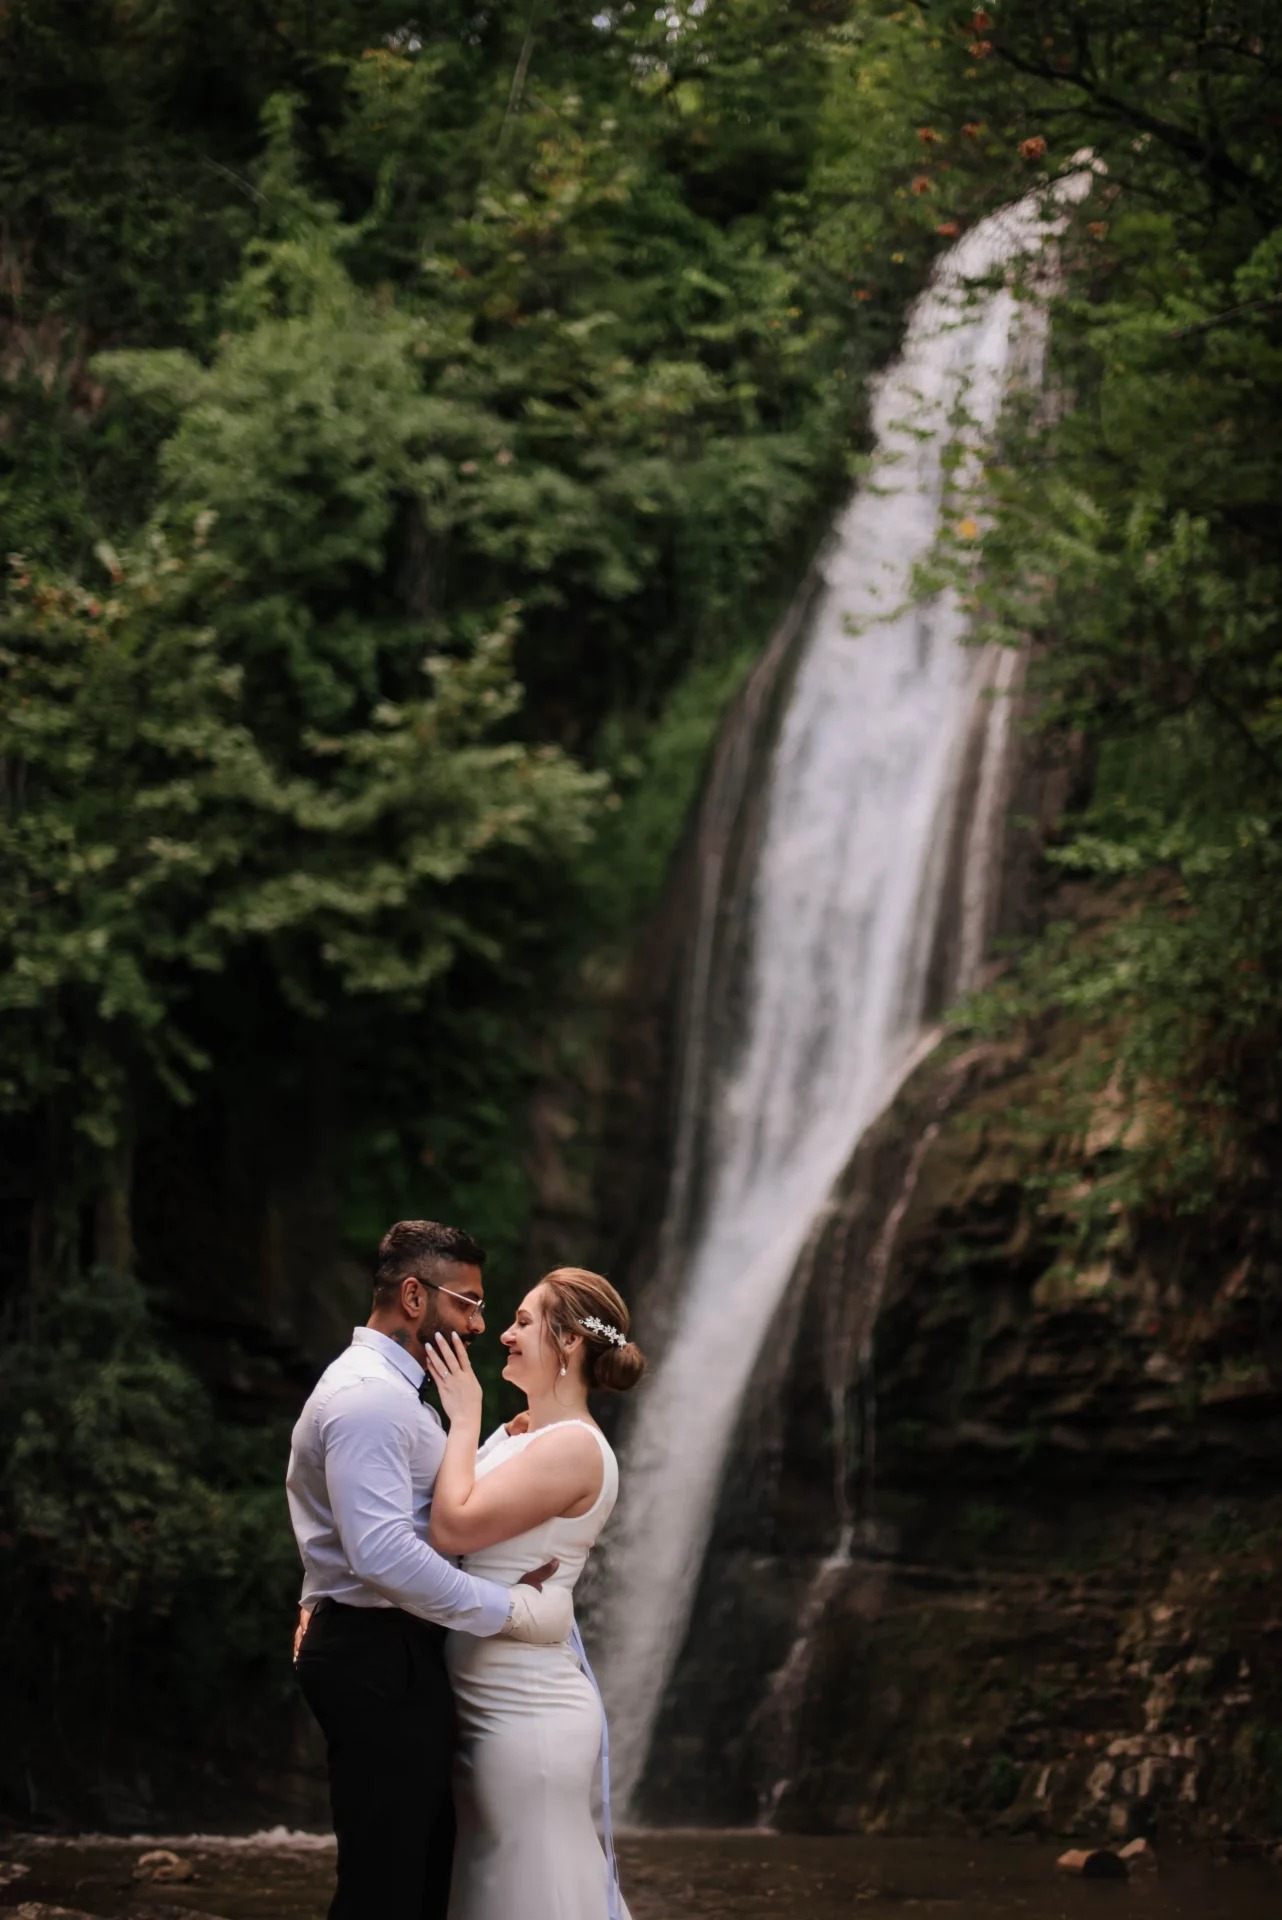 Wedding photos near a waterfall in Georgia